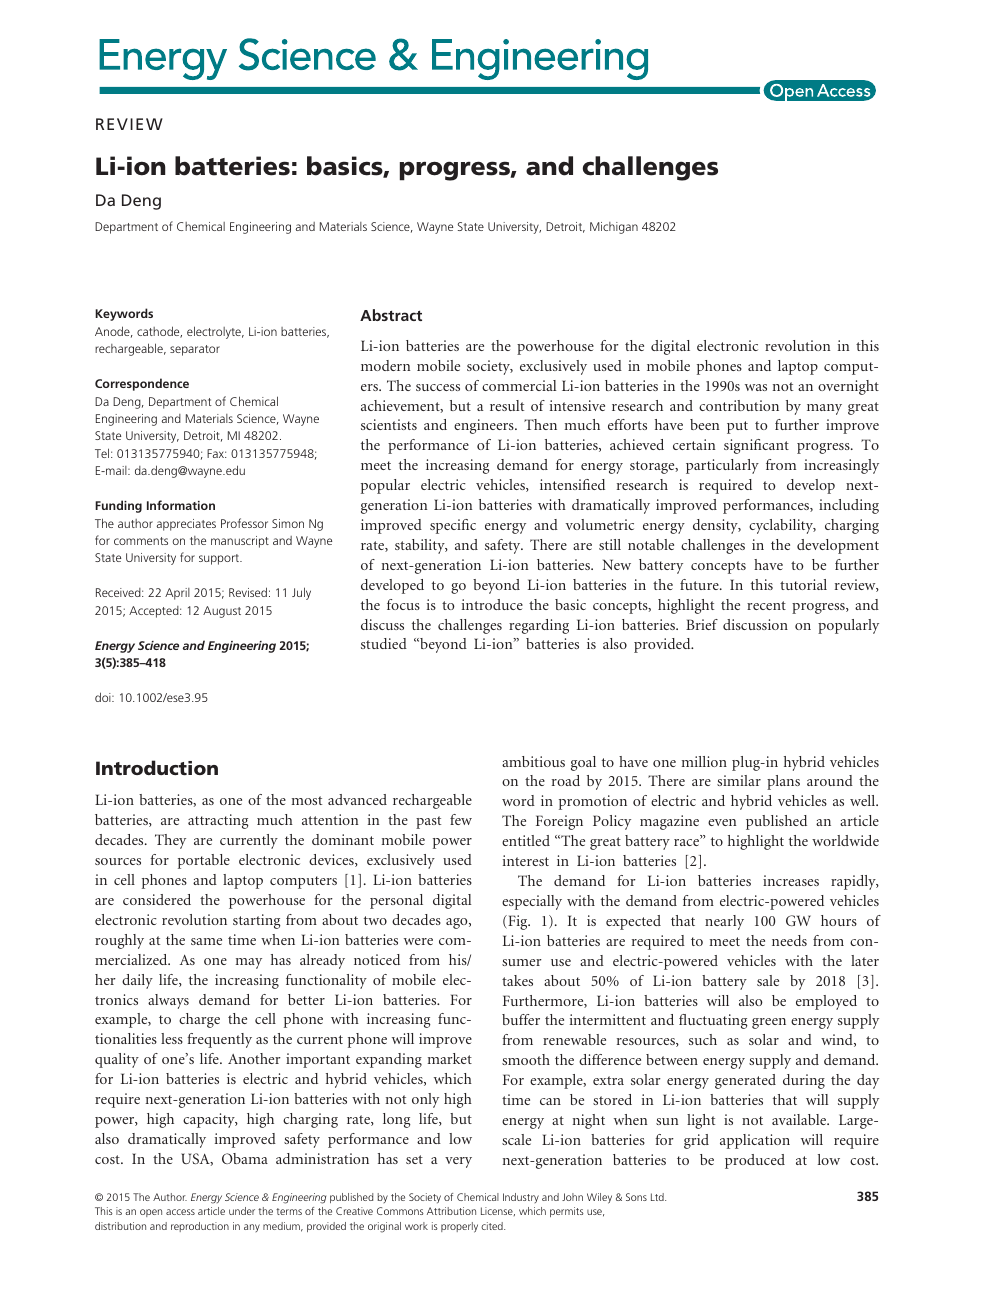 Li-ion batteries: basics, progress, and challenges – topic of 